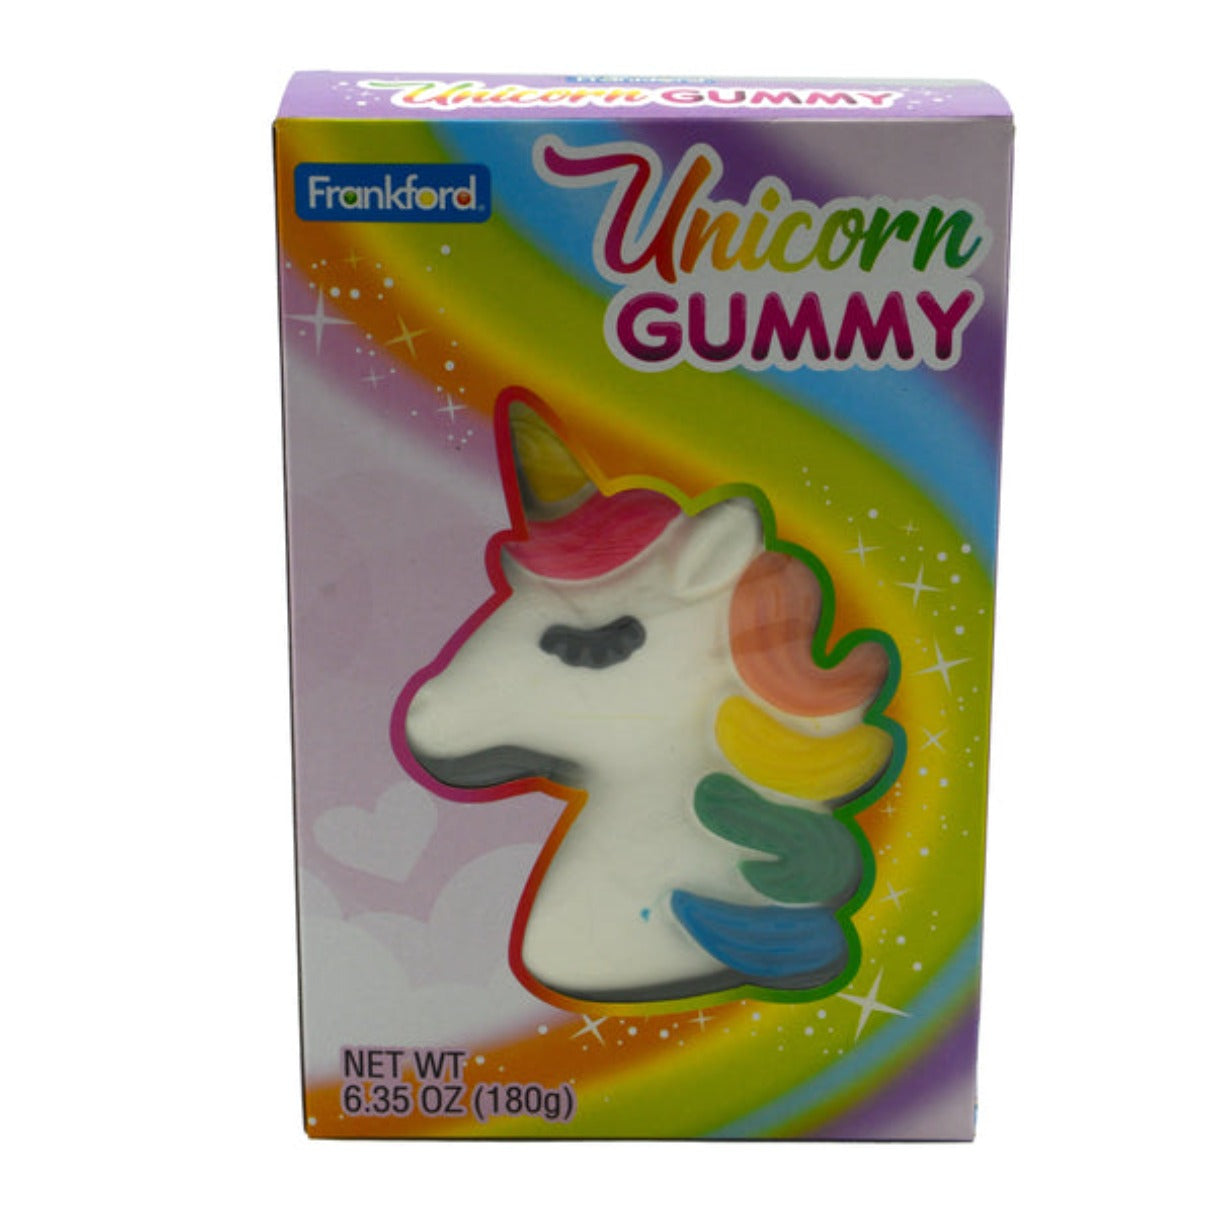 Frankford Unicorn Giant Gummy 6.35oz - 16ct